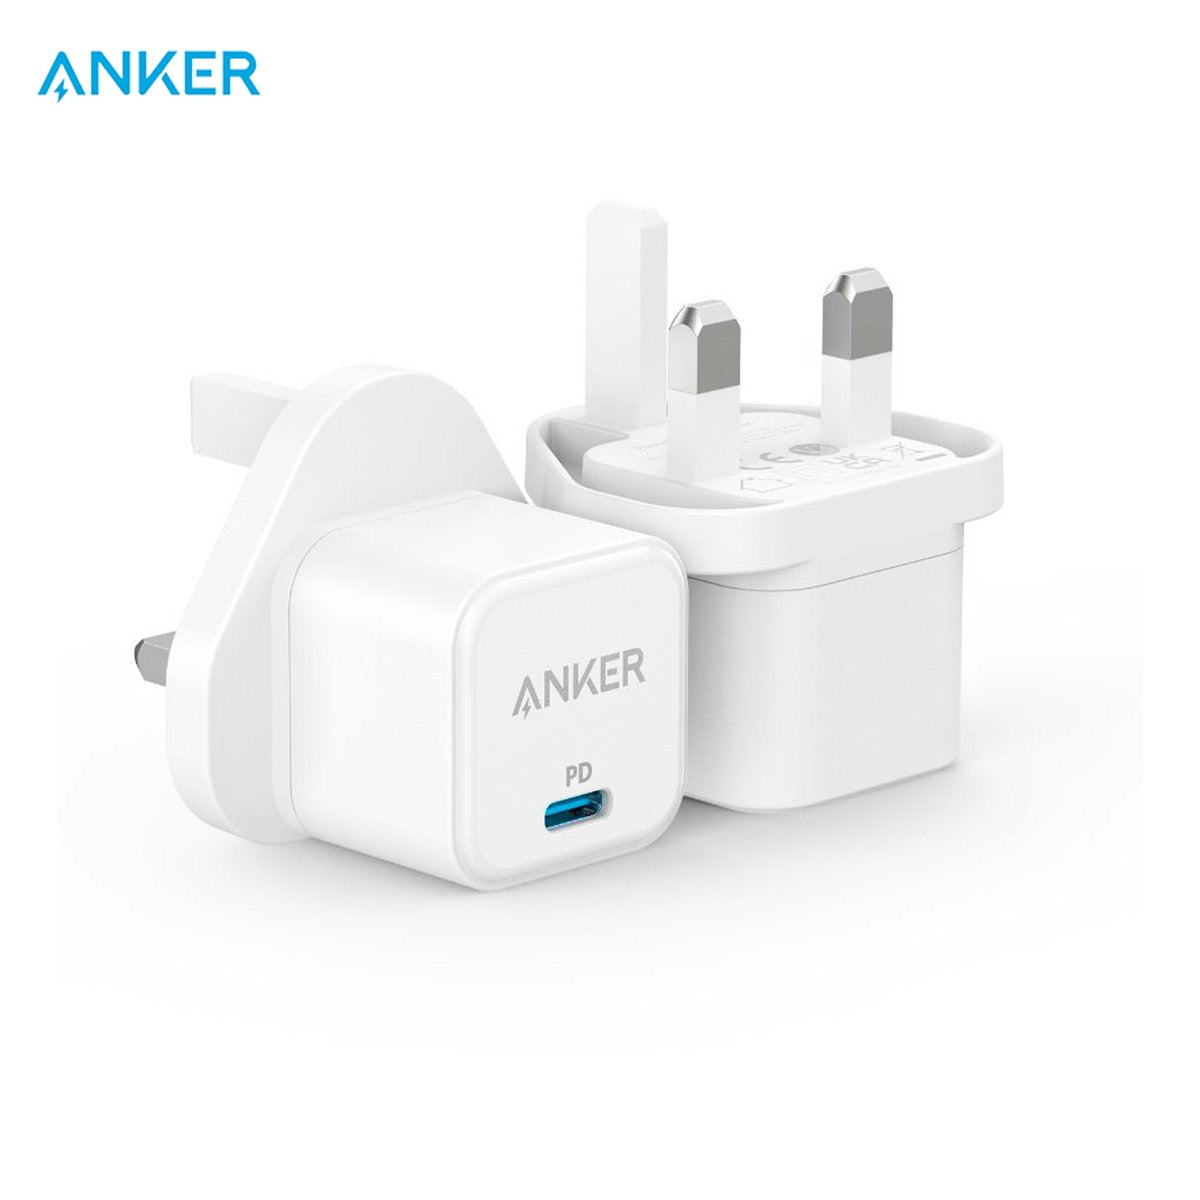 anker USB c port high speed mini charger